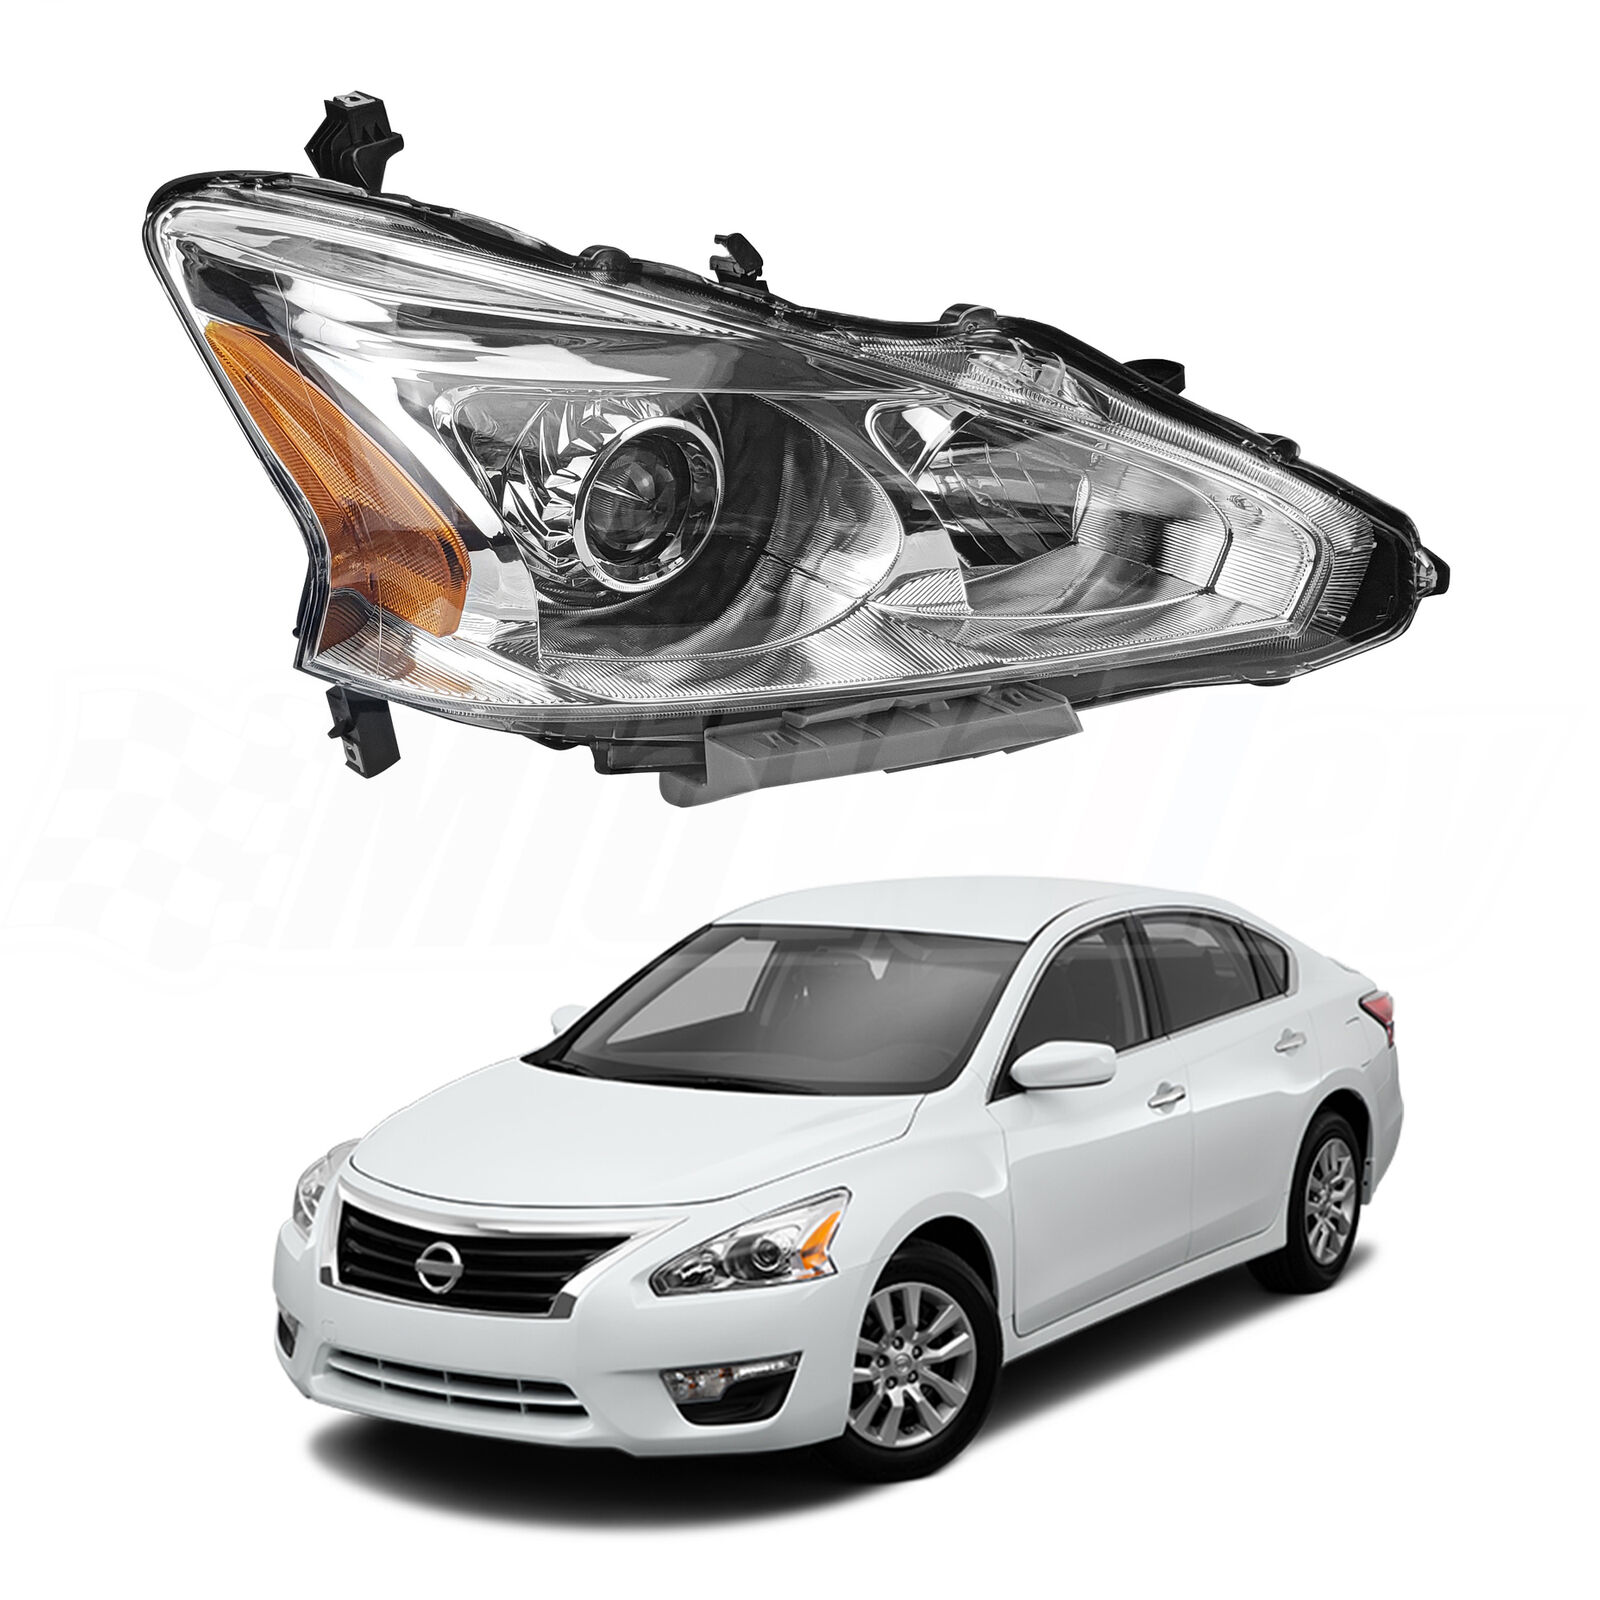 Headlight Replacement Passenger Side For 2013 2014 2015 Nissan Altima Sedan